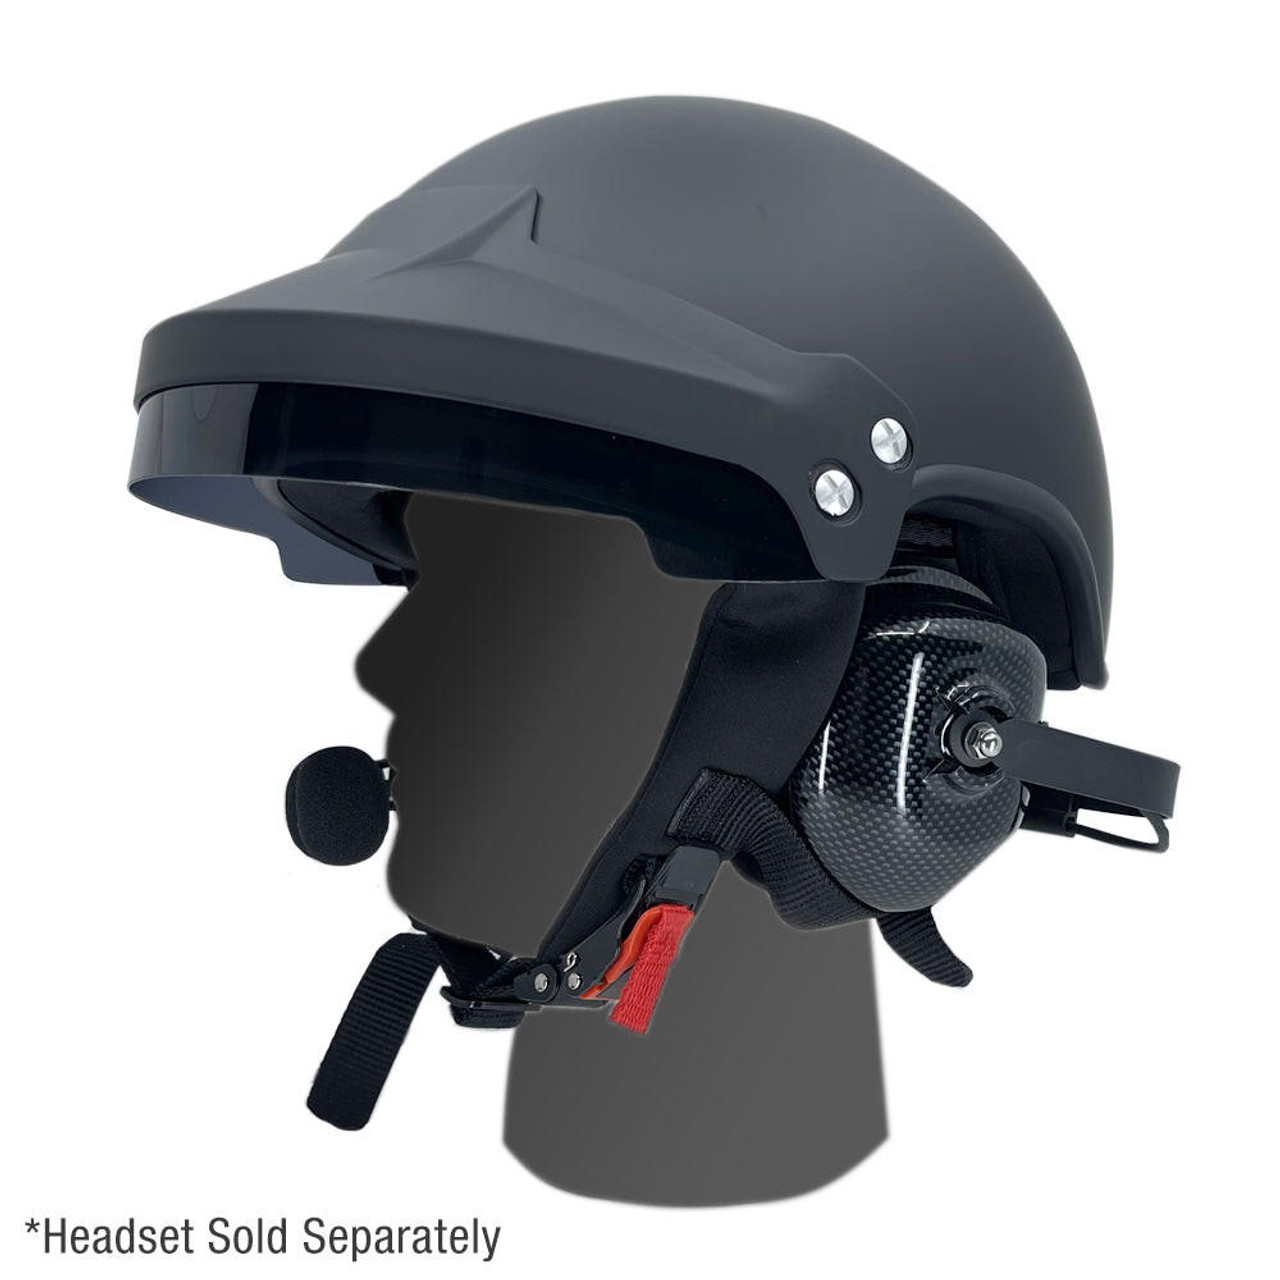 Cardo Systems Introduces New Half Helmet Accessory Kit and Shoei Helmet  Adapter